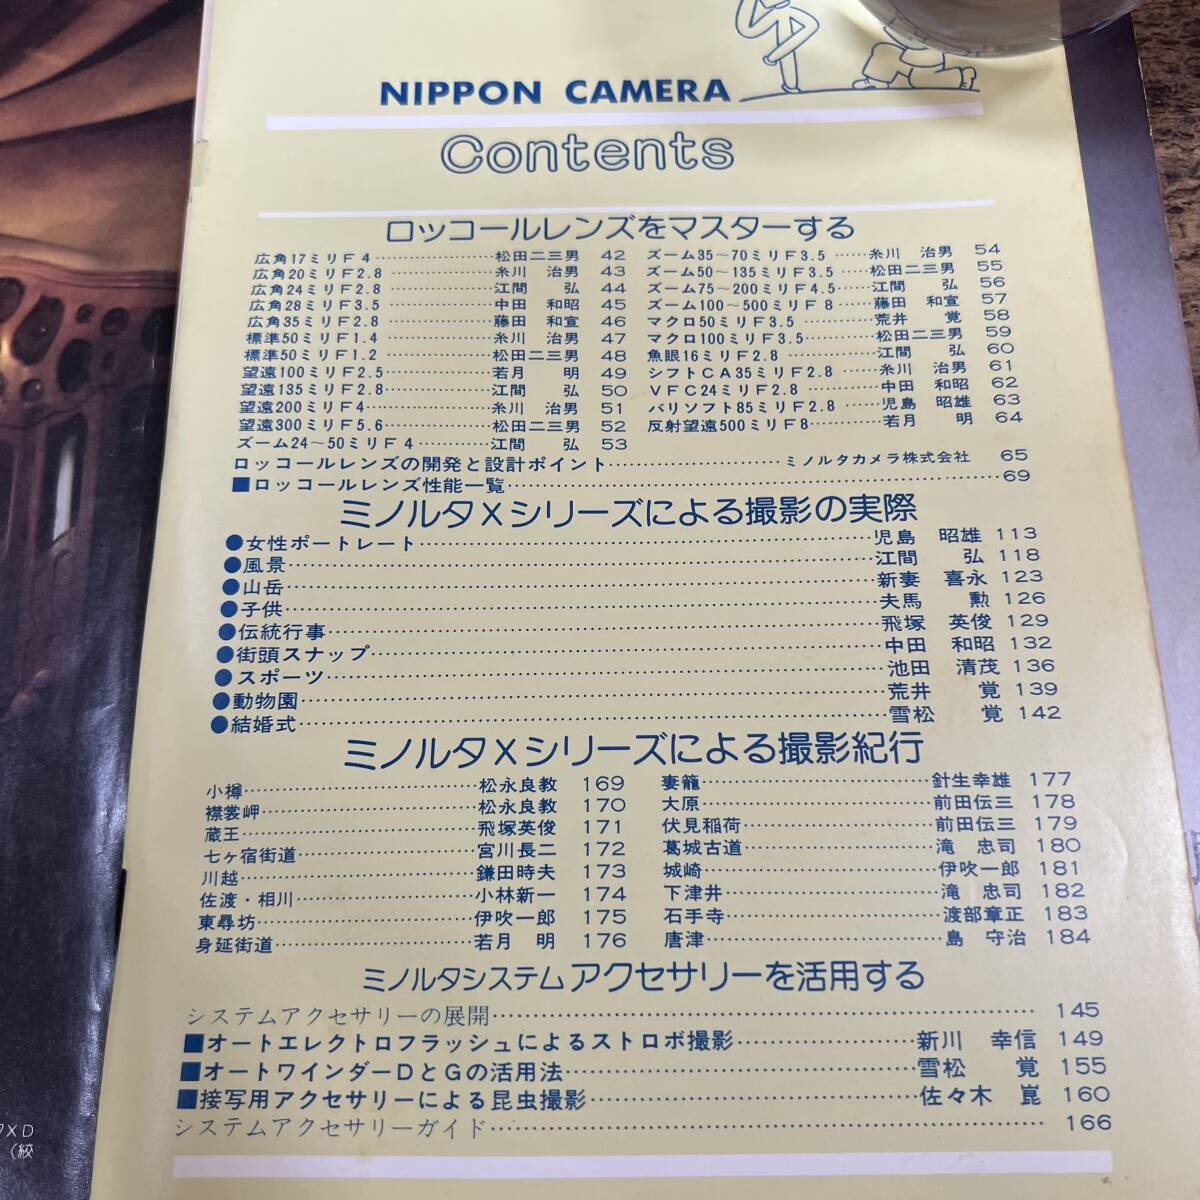 J-3626■NIPPON CAMERA 日本カメラ ミノルタ XD XG-Eの使い方（11月号増刊）■日本カメラ社■昭和53年11月10日発行■_画像5